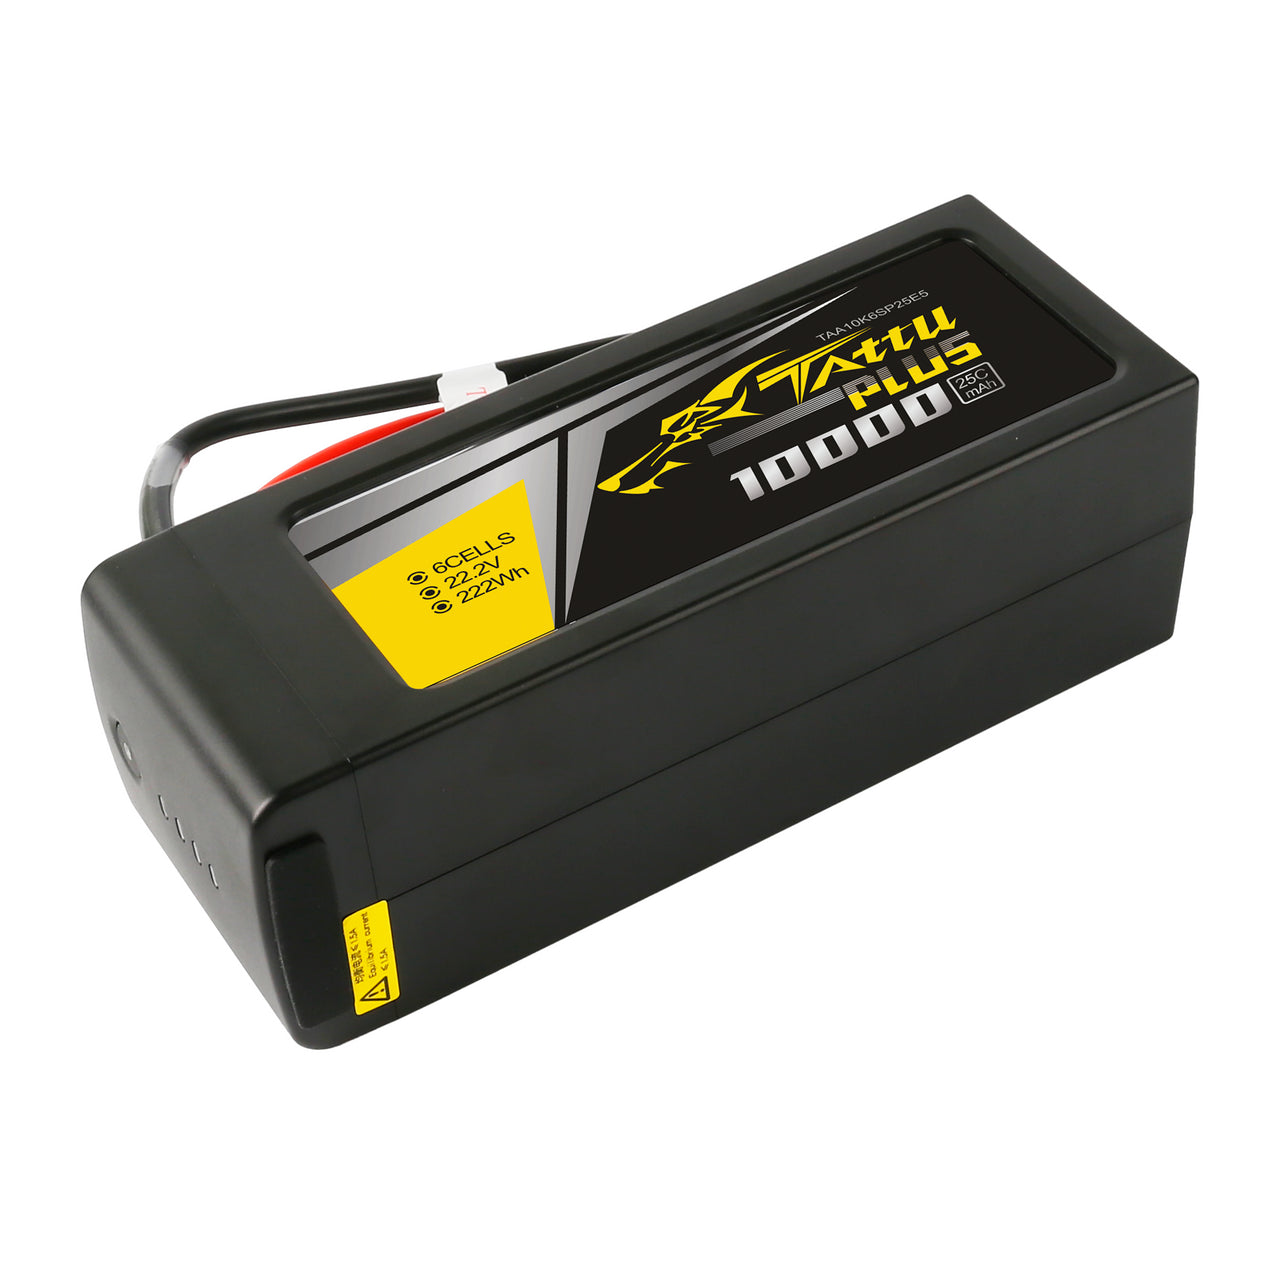 Tattu Plus 22.2V battery pack: high-capacity 10000mAh, Lipo design, and versatile EC5/AS150+XT150 plug compatibility.